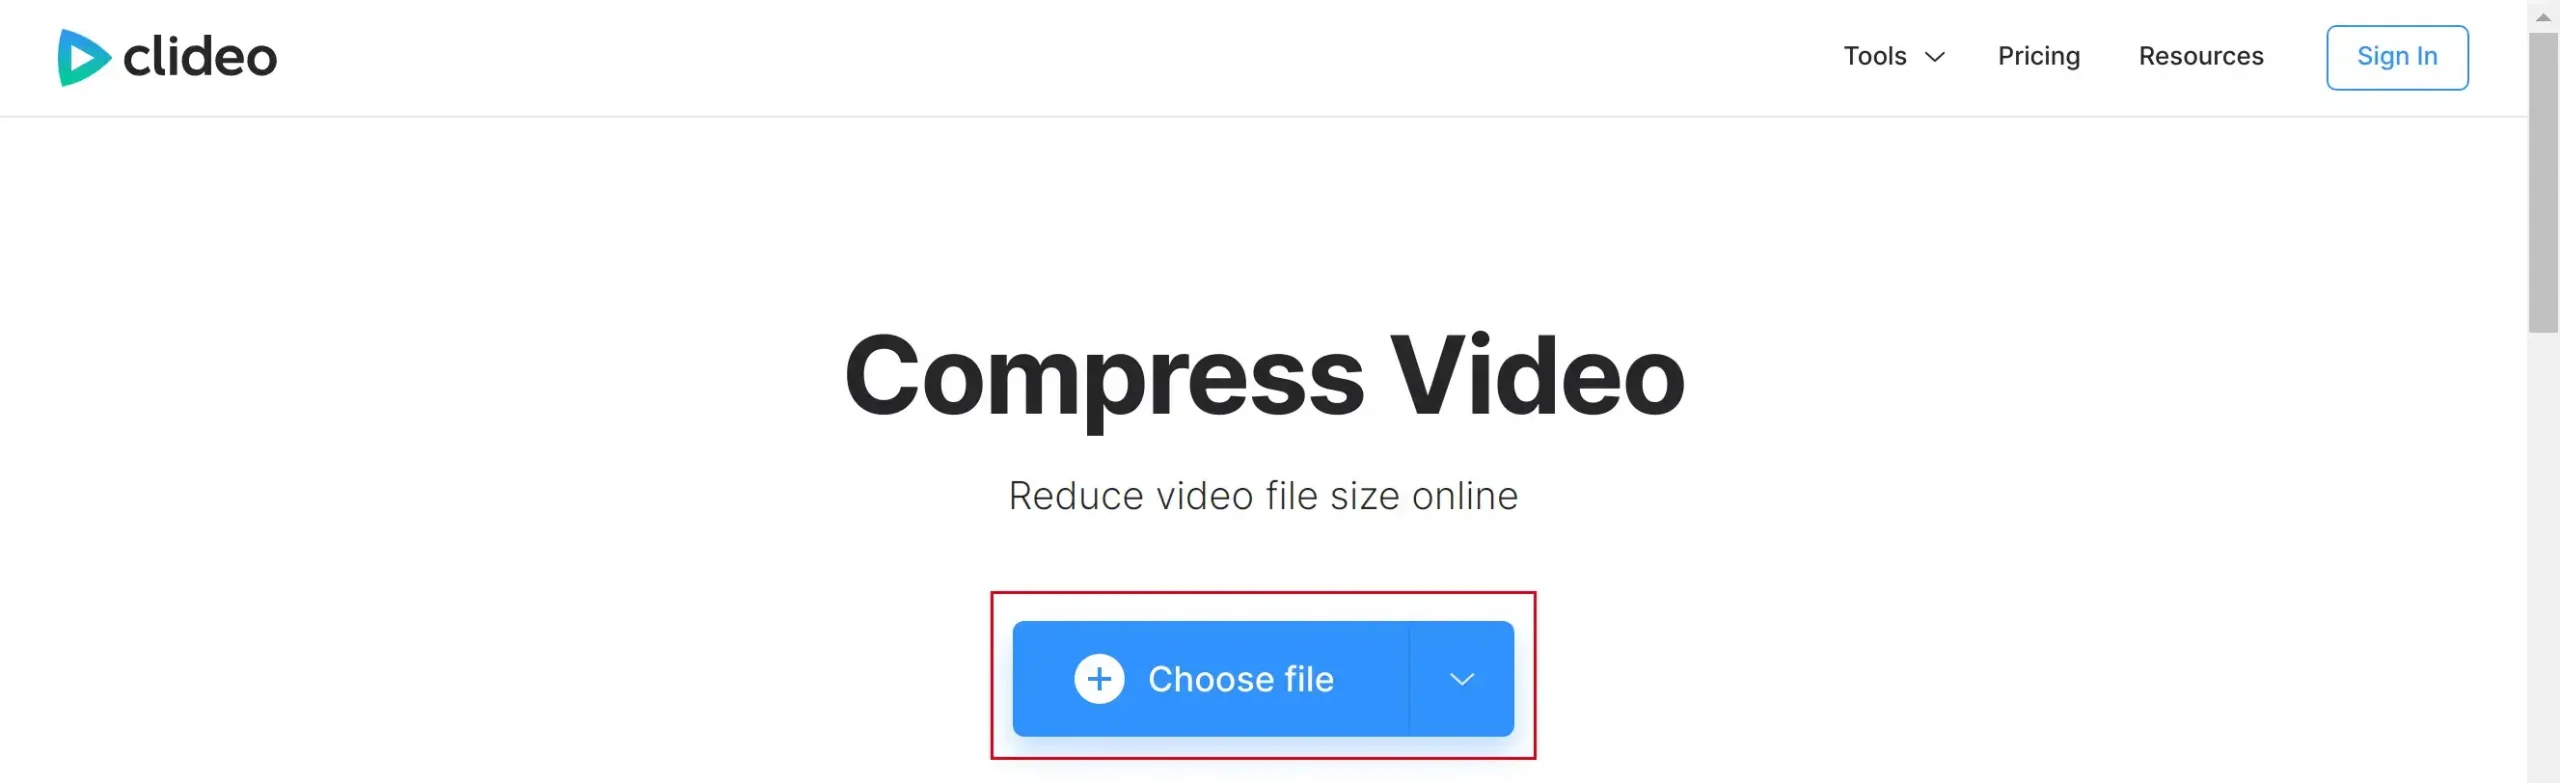 compress wmv files through clideo step 2